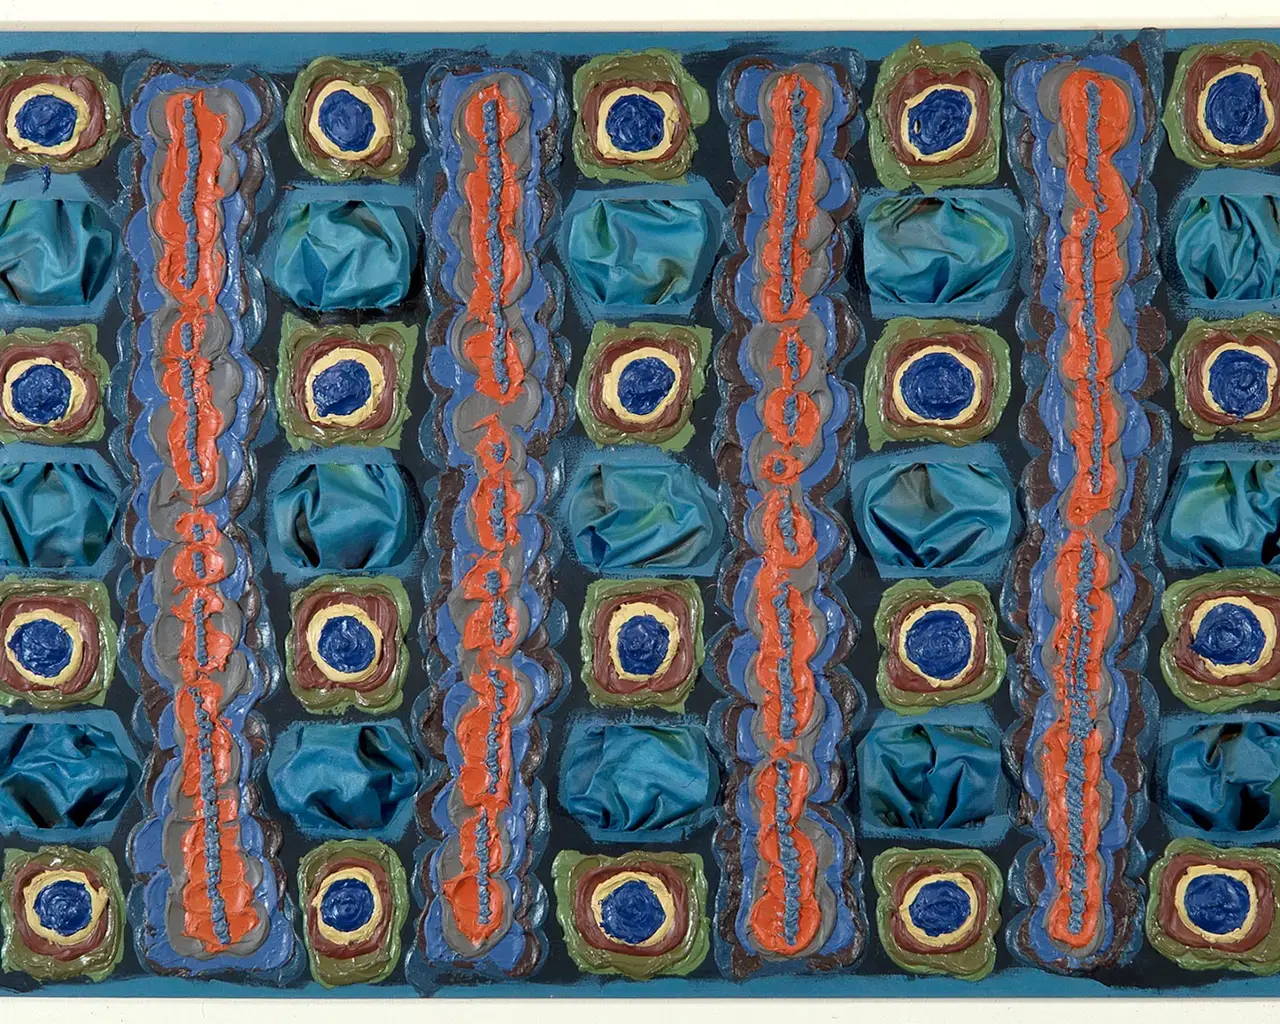 Cynthia Carlson, Triple Buldges, 1975, acrylic on woven canvas, 48" x 78". Photo courtesy of the artist.